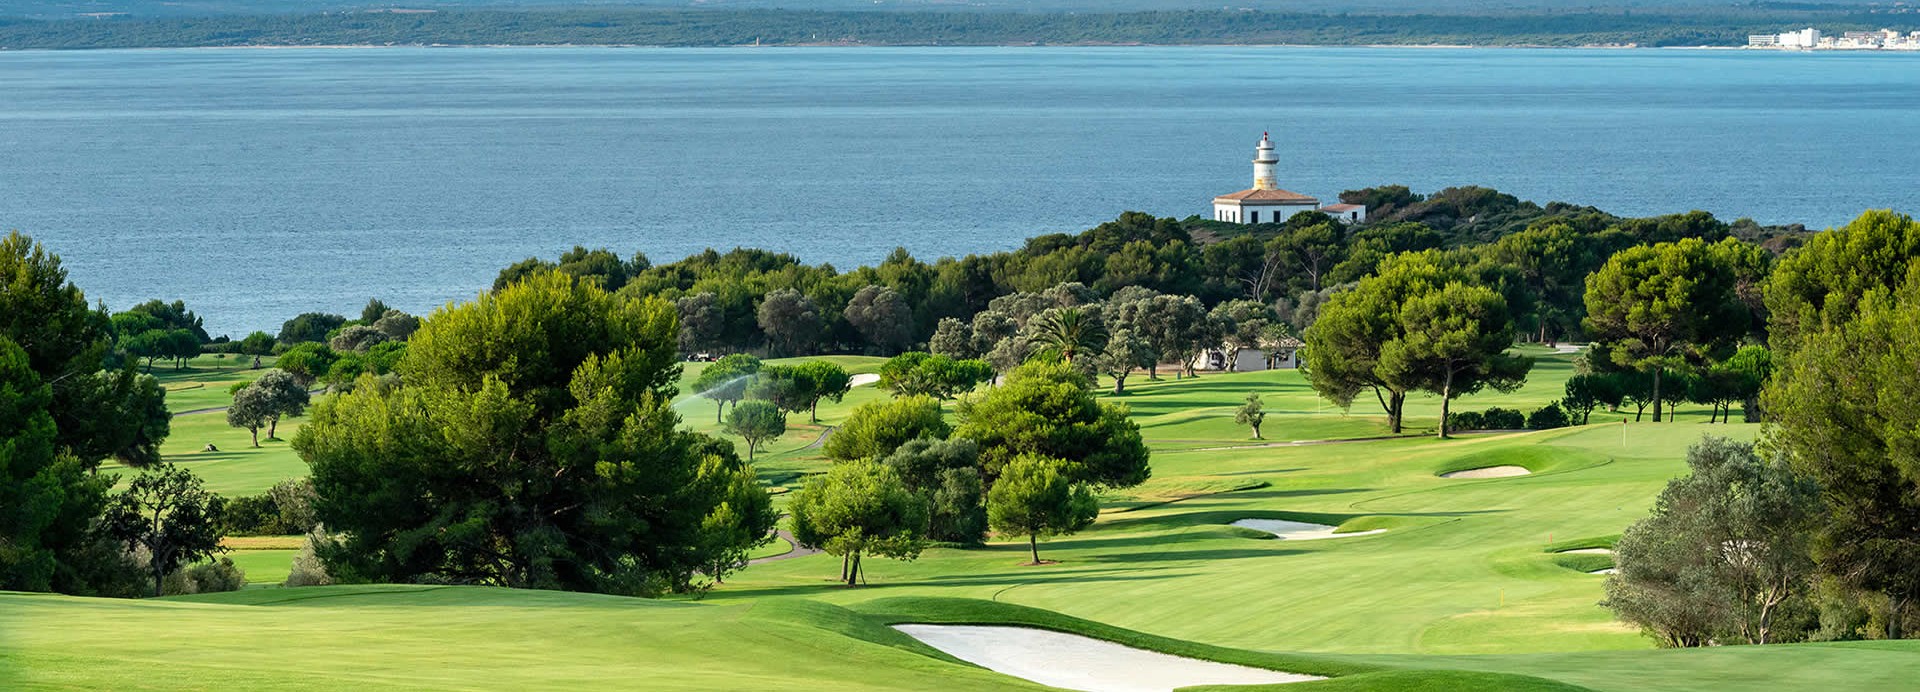 Club de Golf Alcanada  | Golfové zájezdy, golfová dovolená, luxusní golf